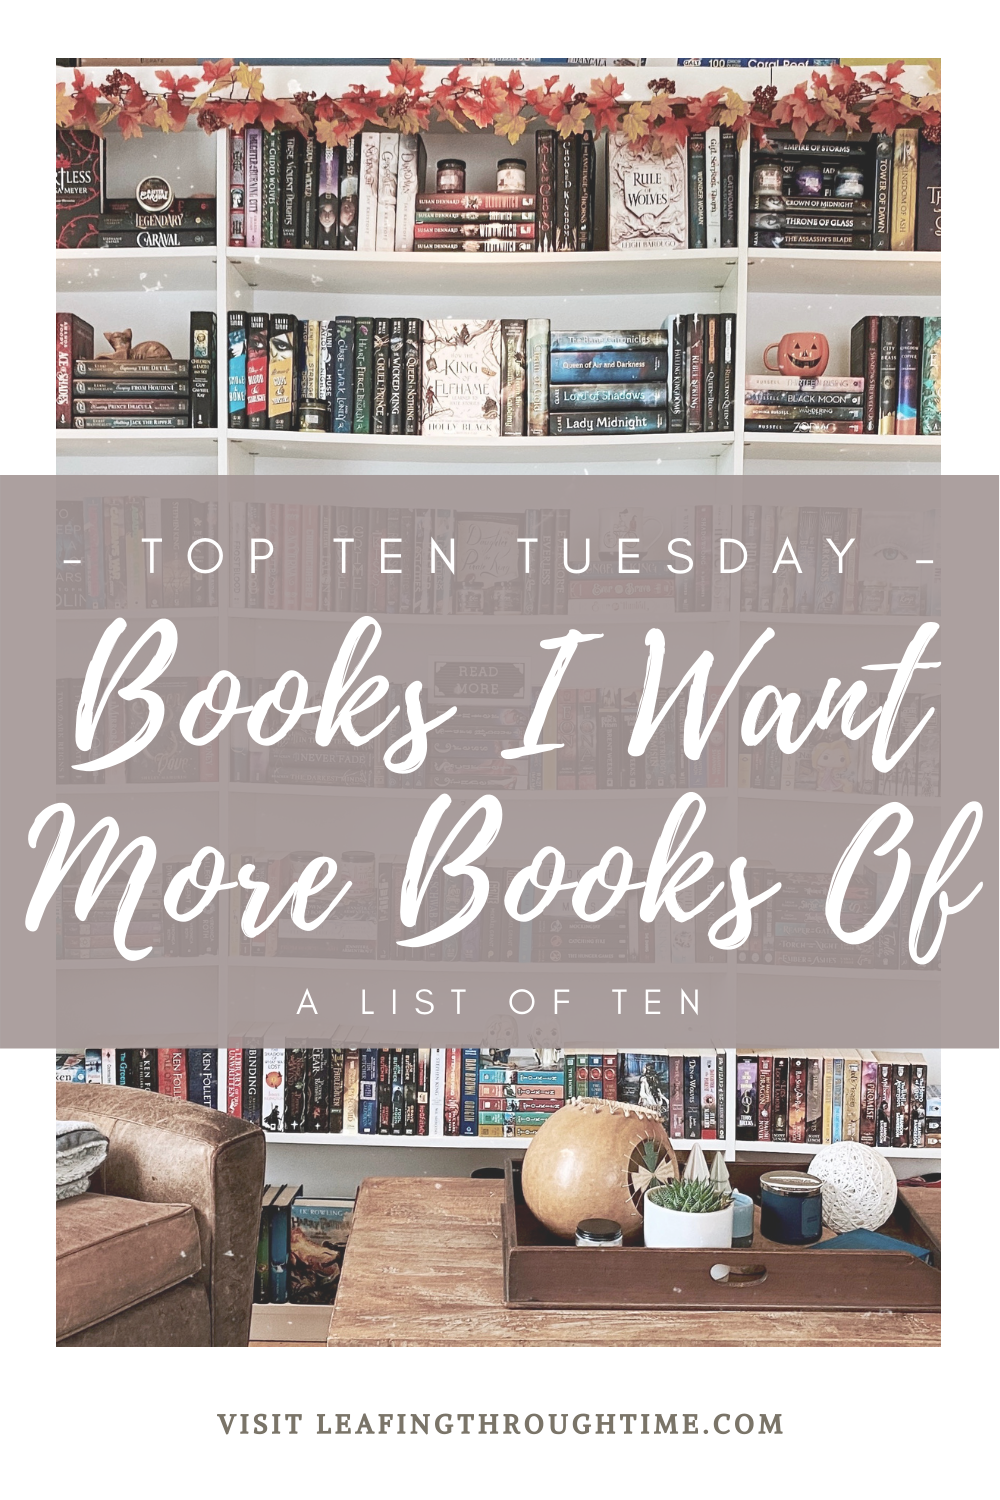 TTT – Books I Want More Books Of